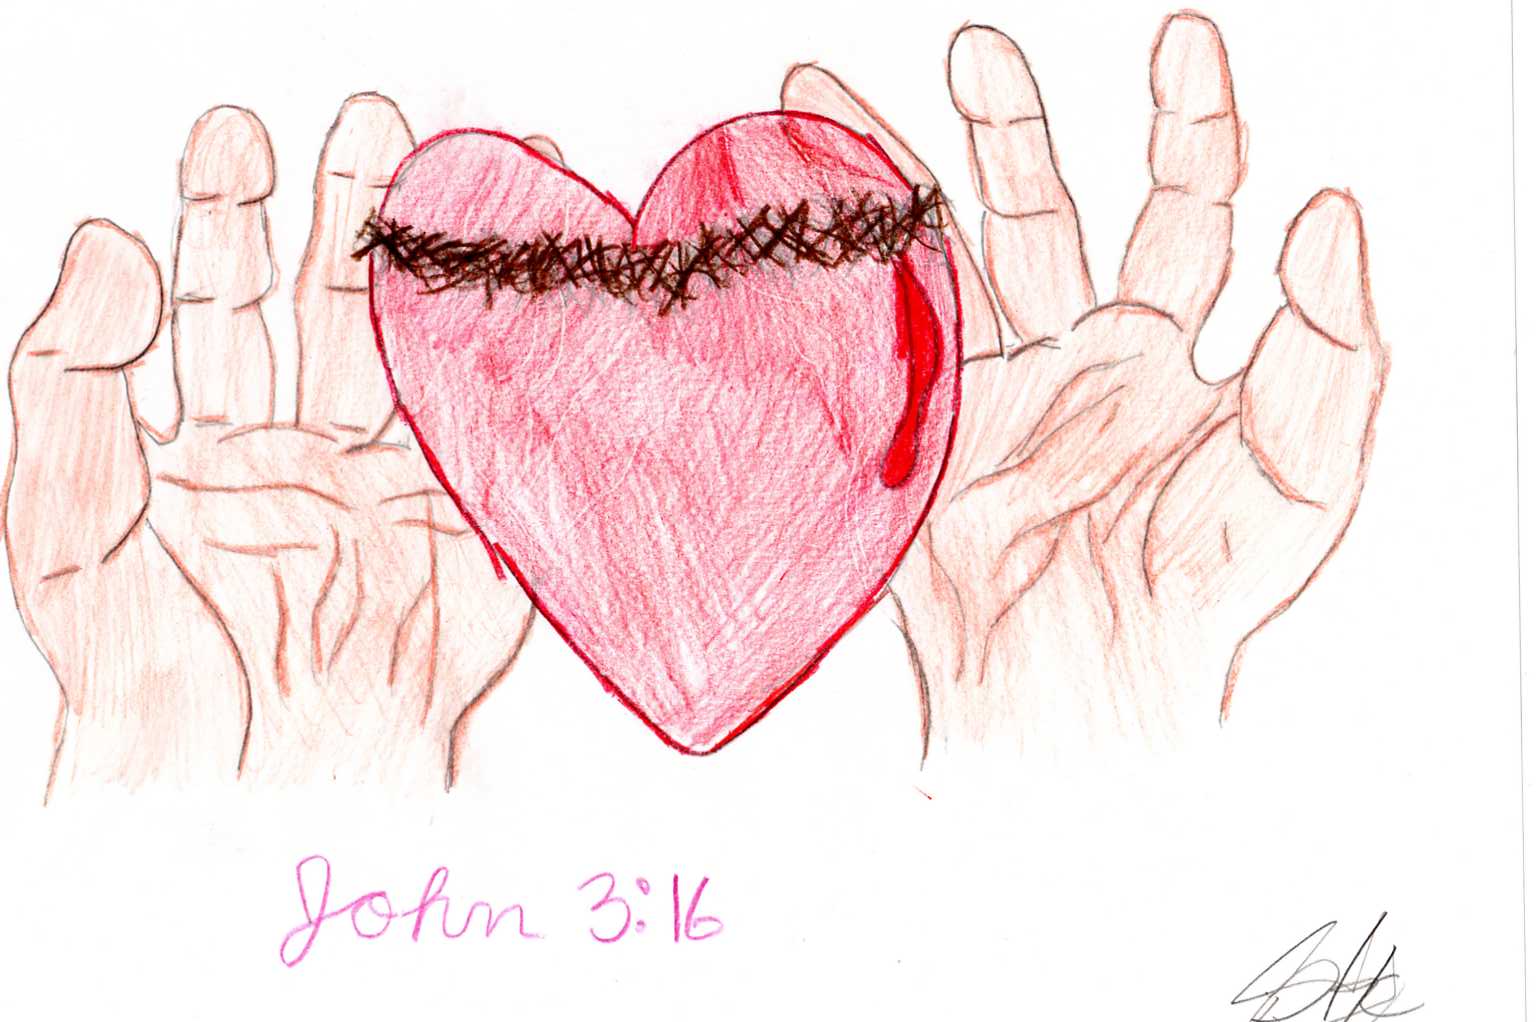 John 3:16 by eriepilot44